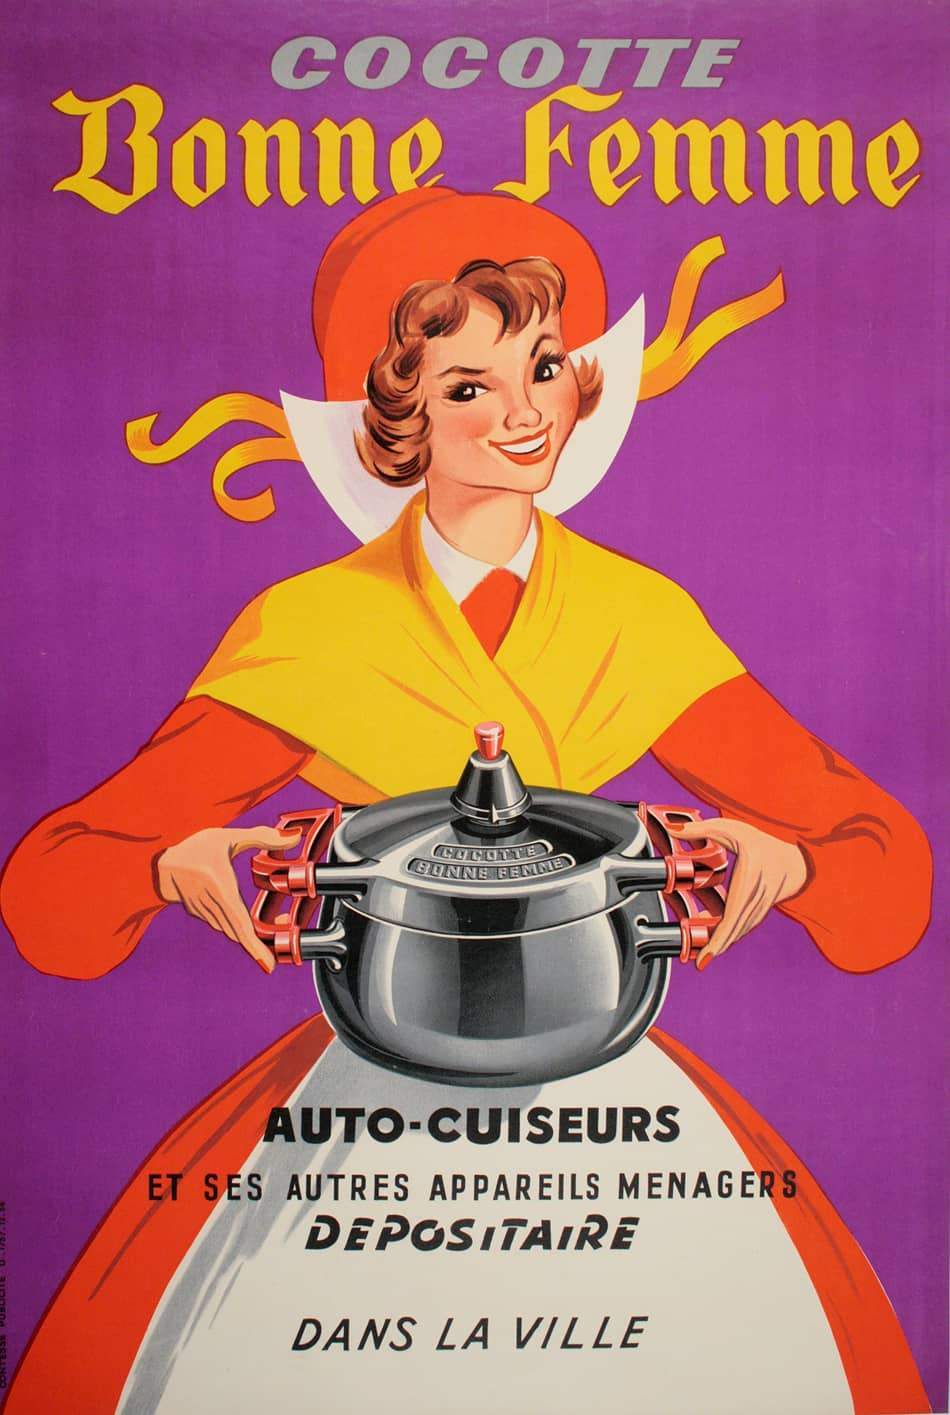 Original French Cooking Poster 1956 - Cocotte Bonne Femme